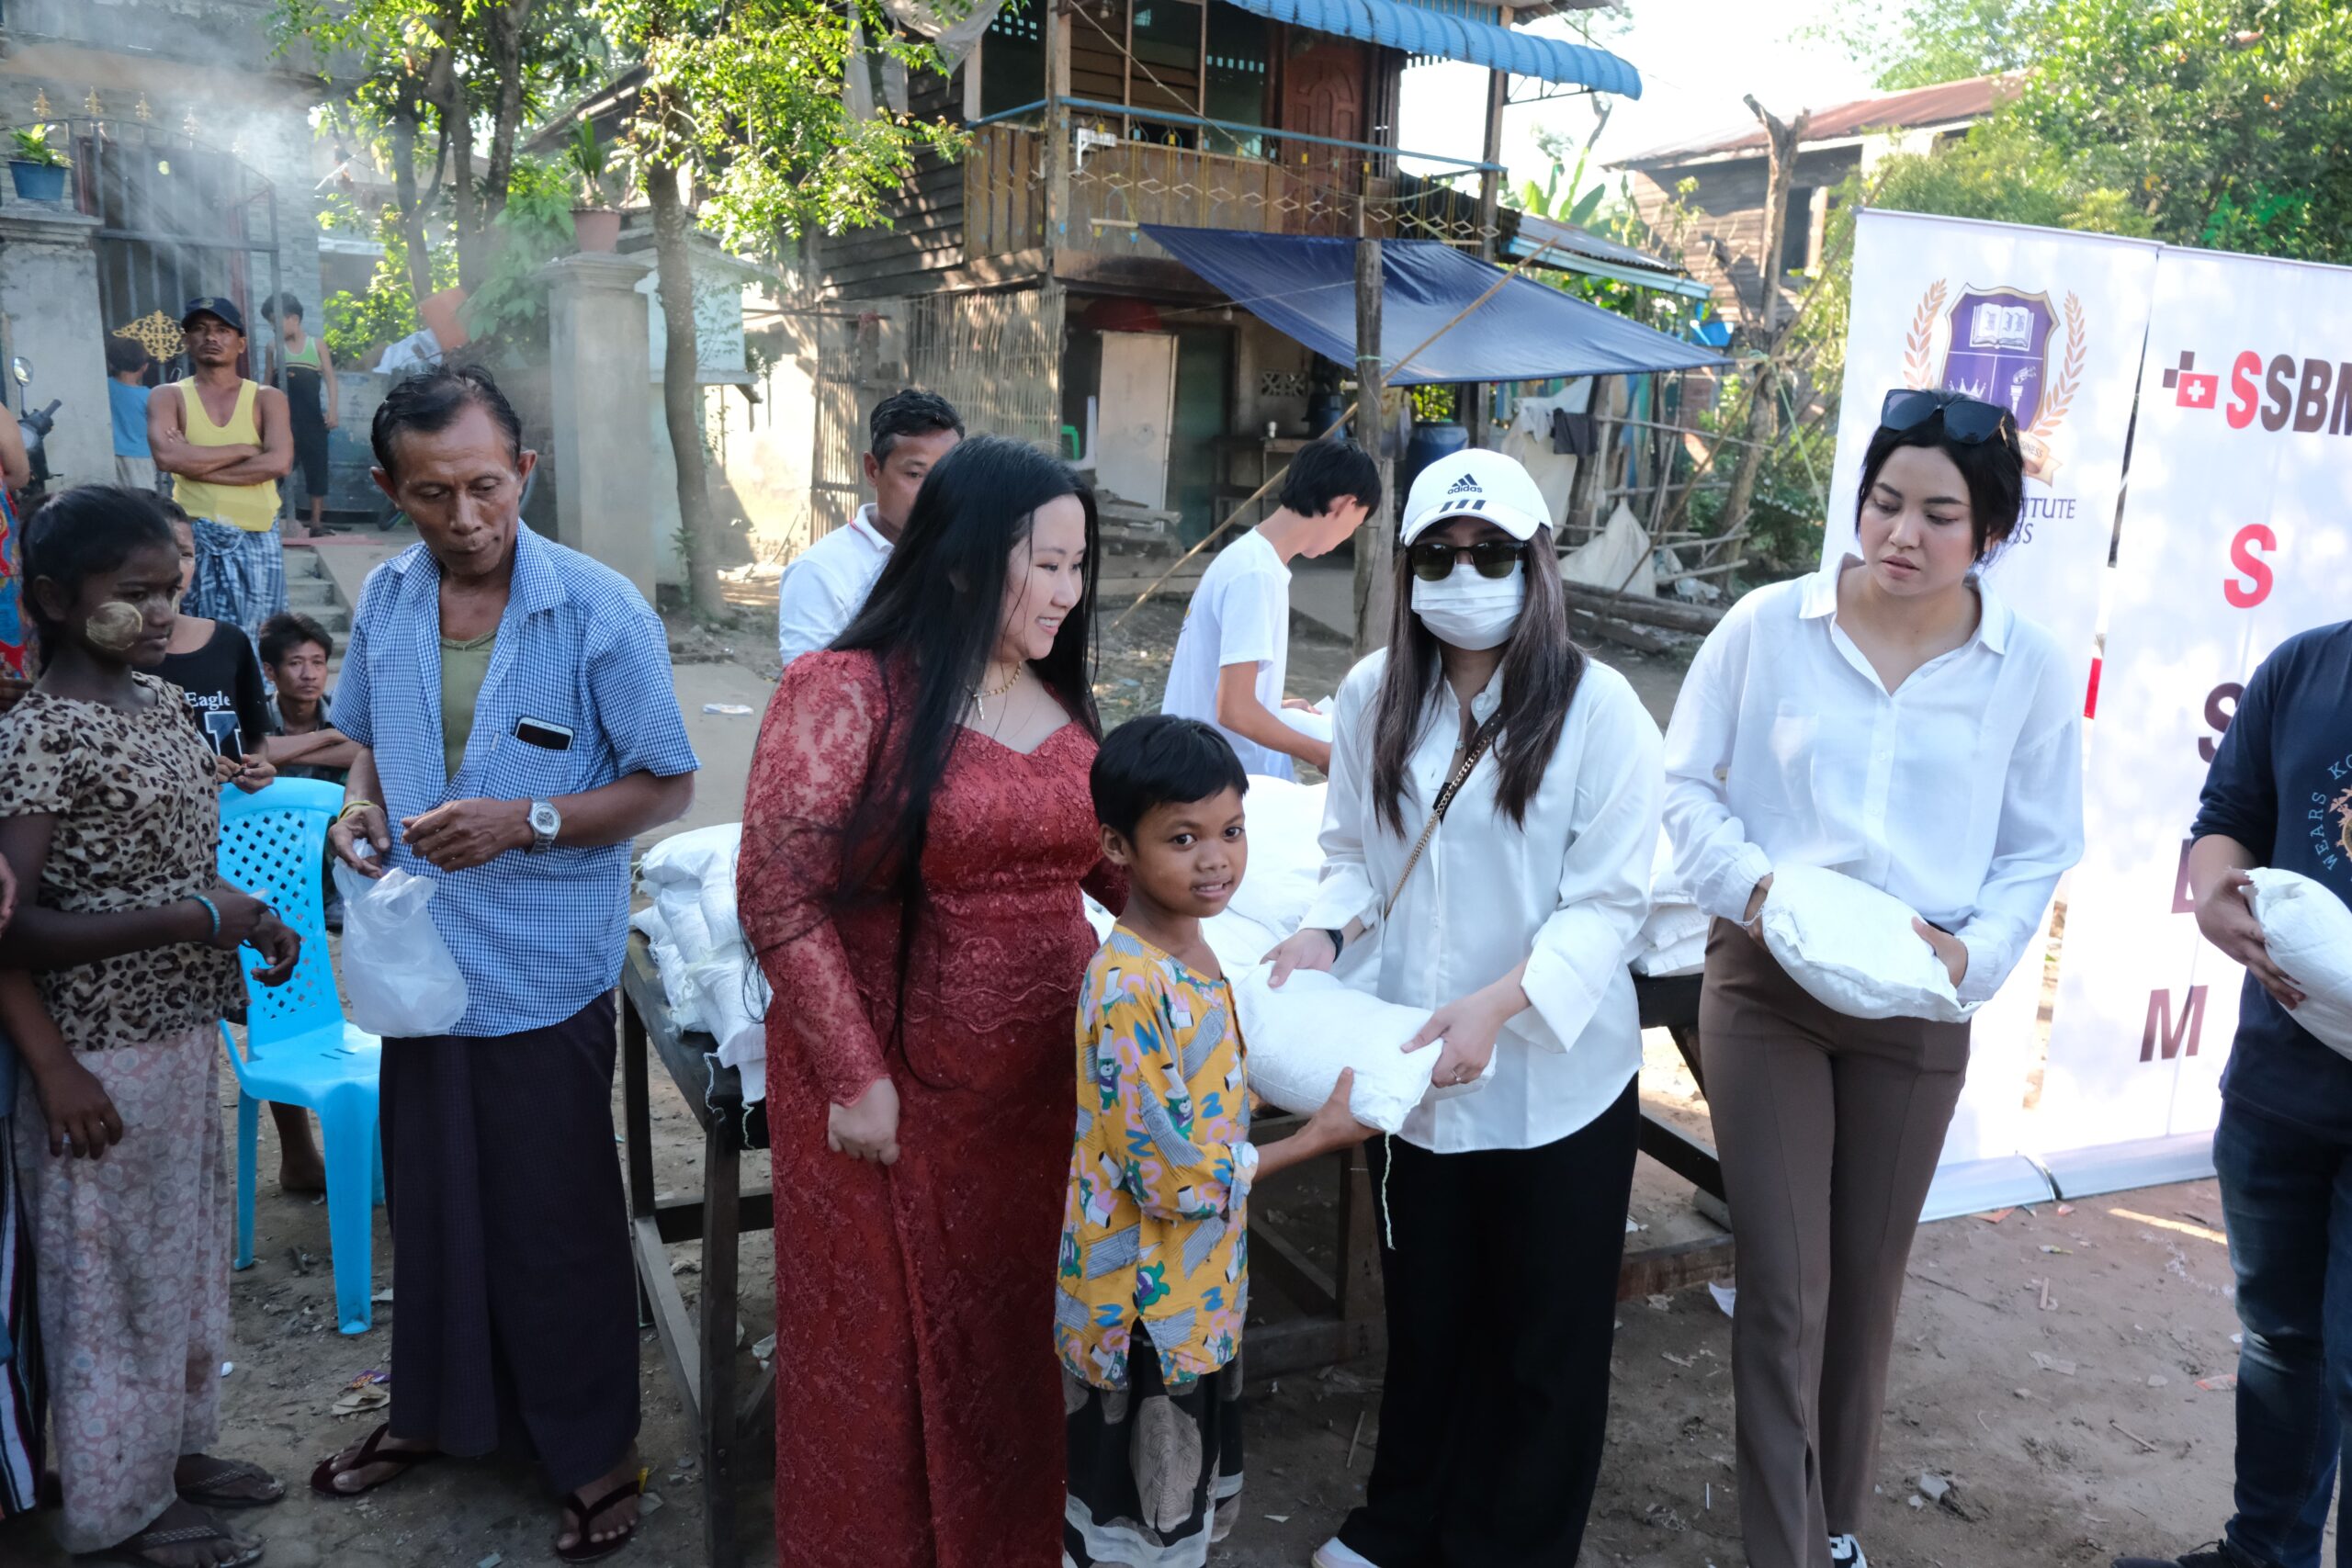 ssbm students helping in myanmar